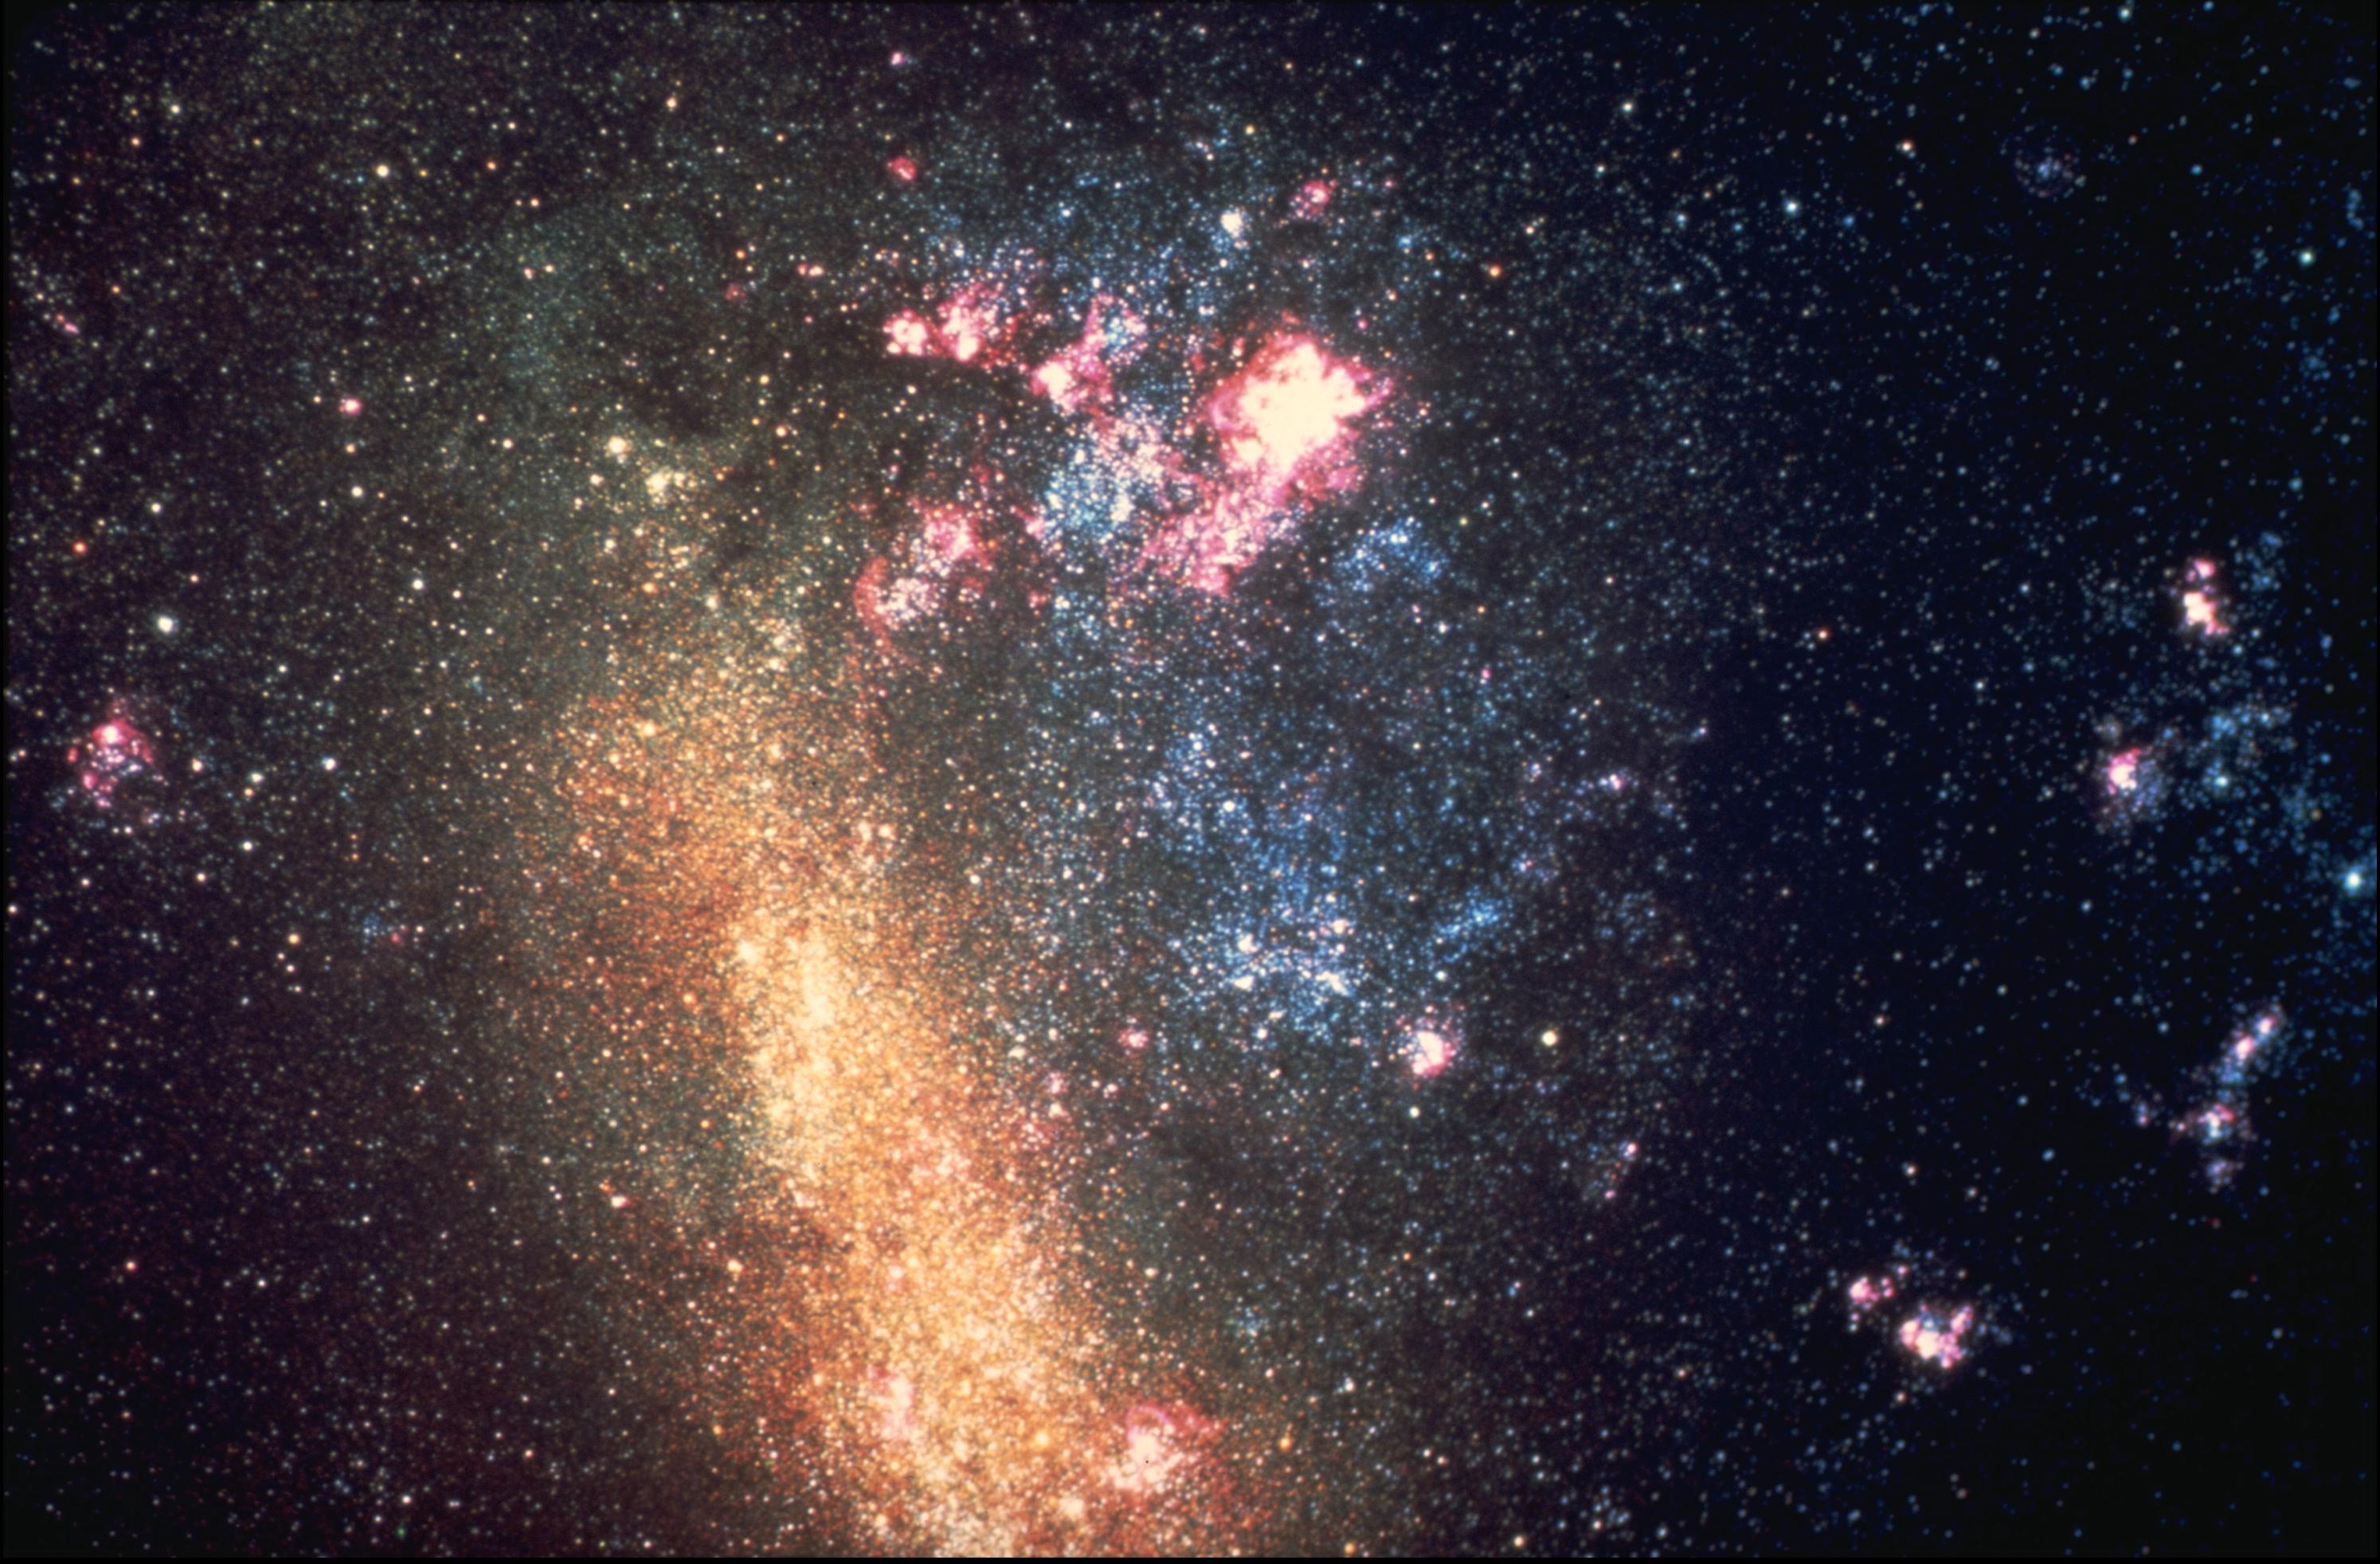 Neighboring Galaxy: The Large Magellanic Cloud